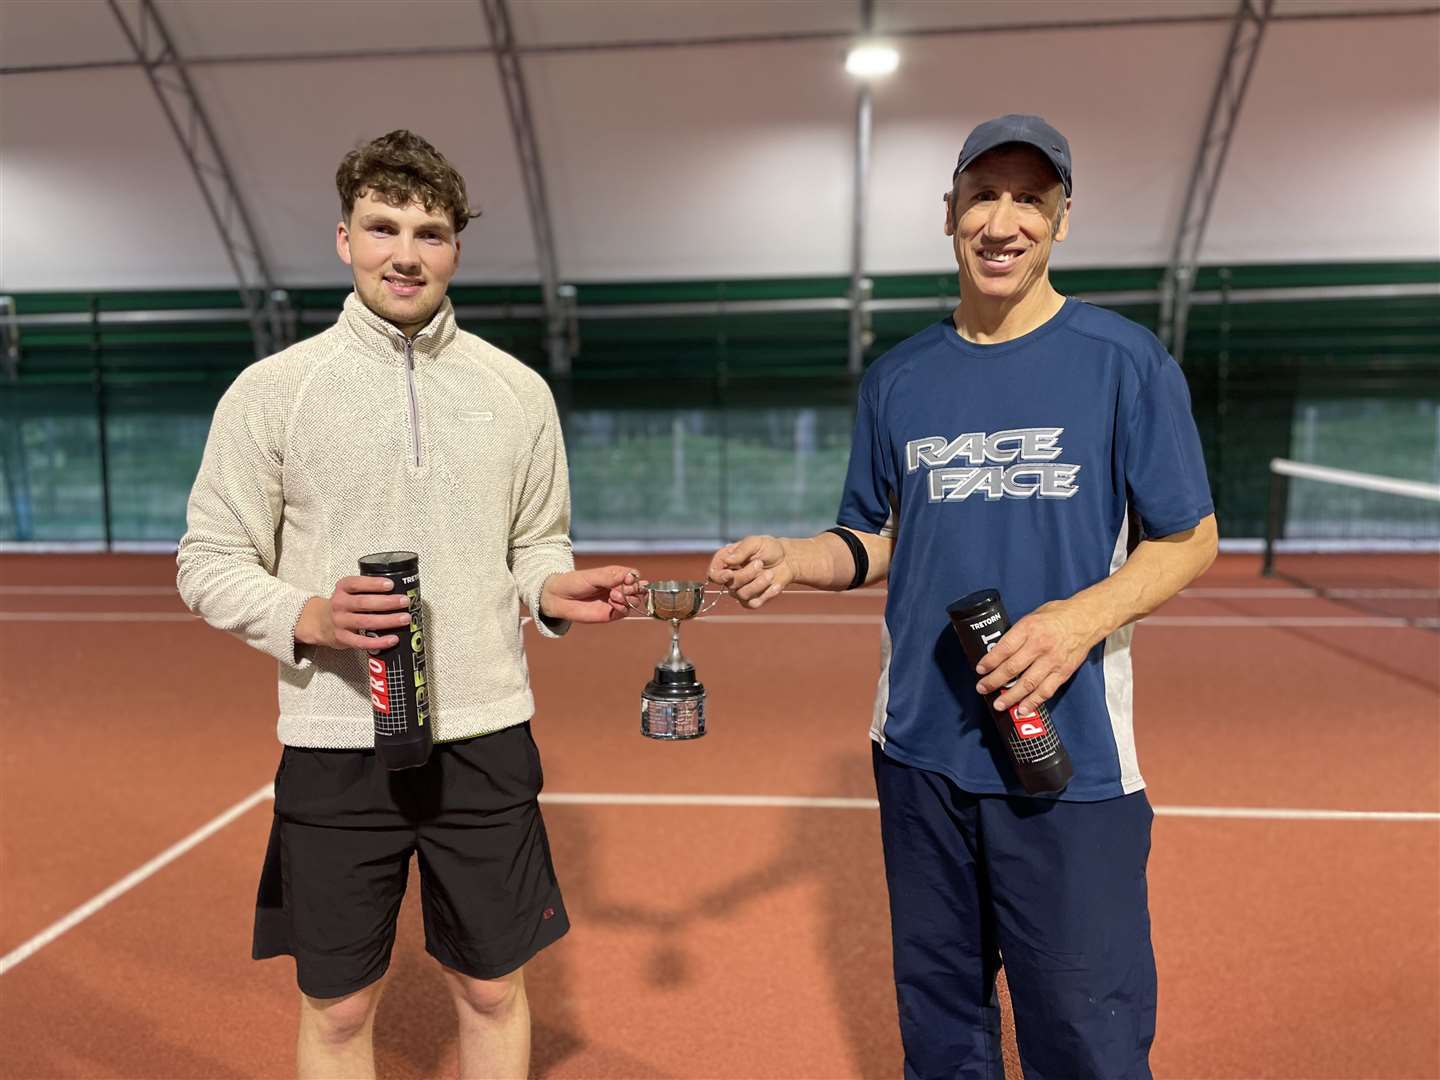 Men’s doubles winners Angus Harrold and Grant Davis with the trophy after winning in a tie-break.